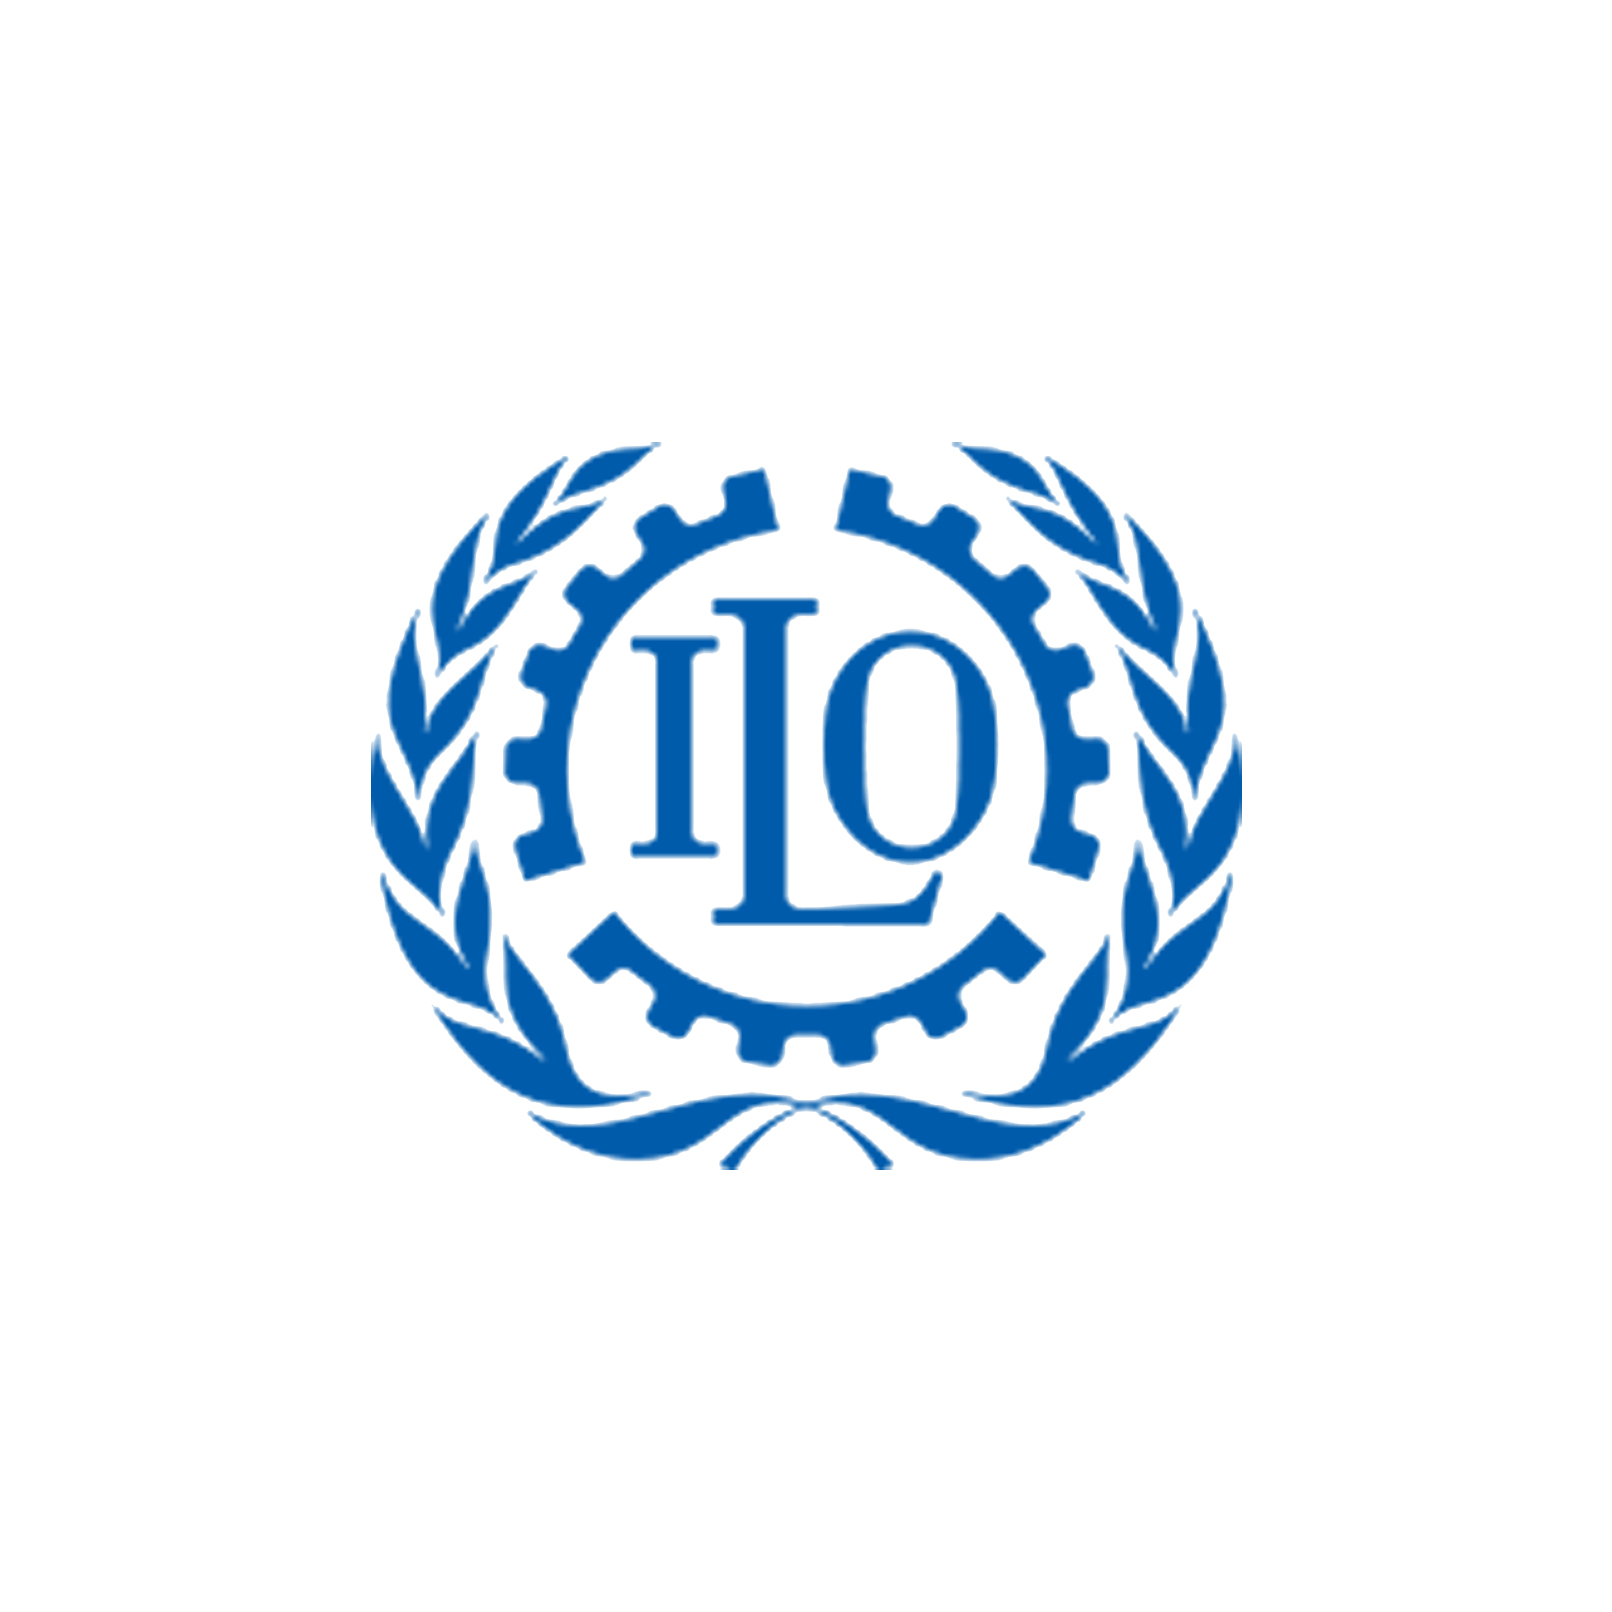 International Labour Organization Logo